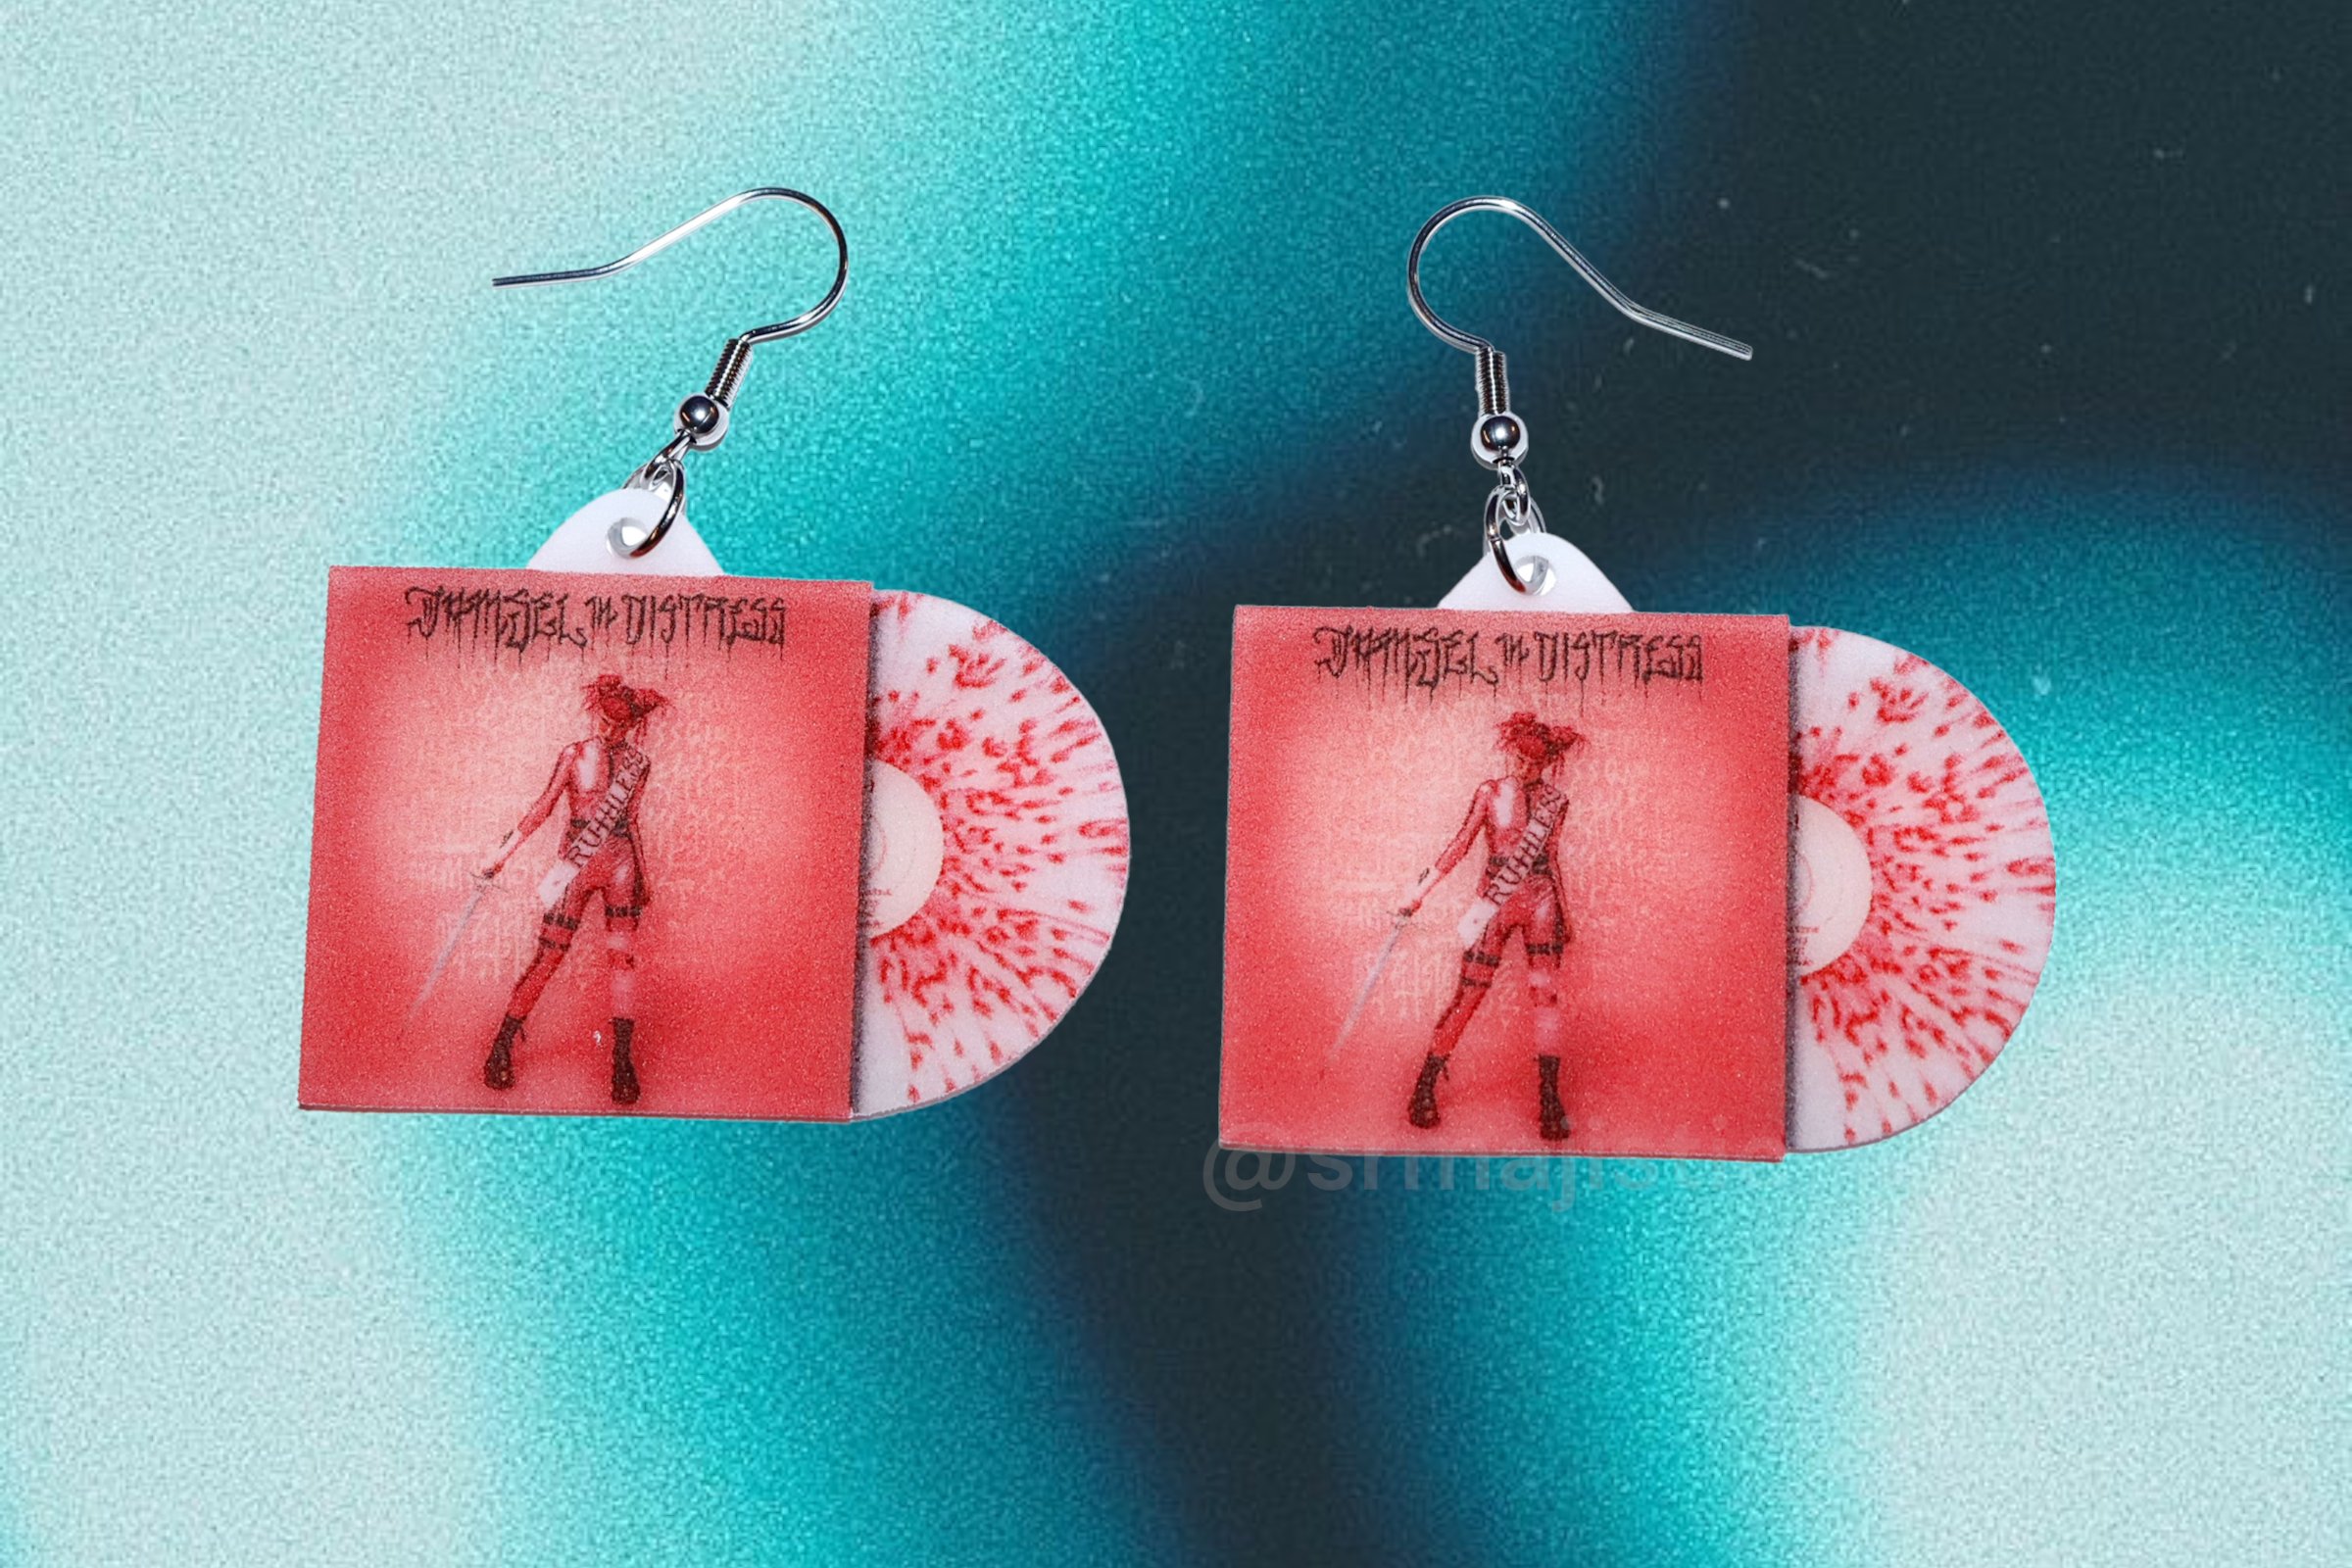 Girli Damsel in Distress/ Ex-Talk Vinyl Album Handmade Earrings!